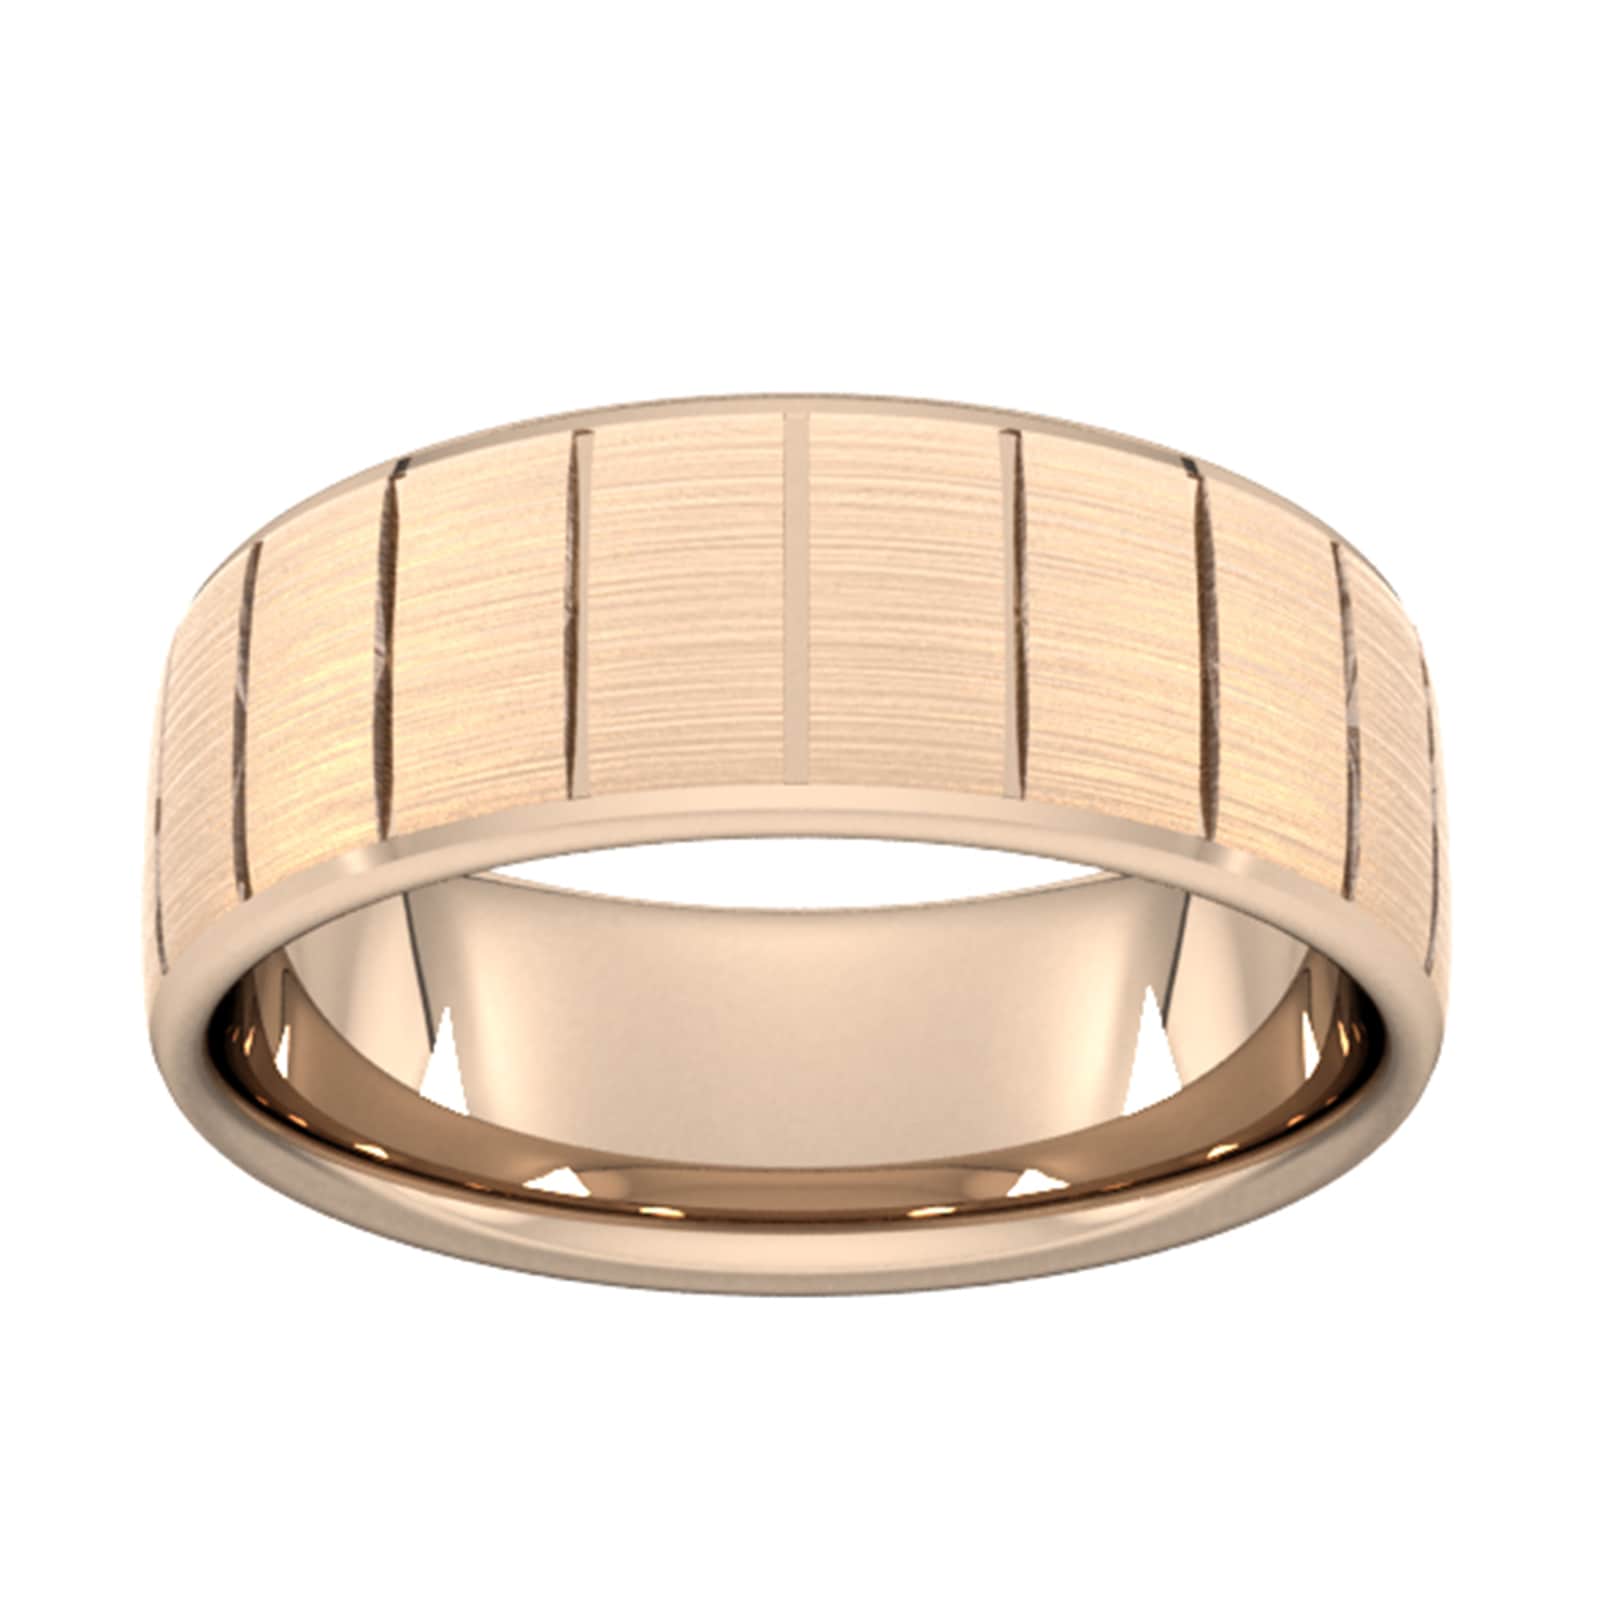 8mm D Shape Standard Vertical Lines Wedding Ring In 9 Carat Rose Gold - Ring Size U